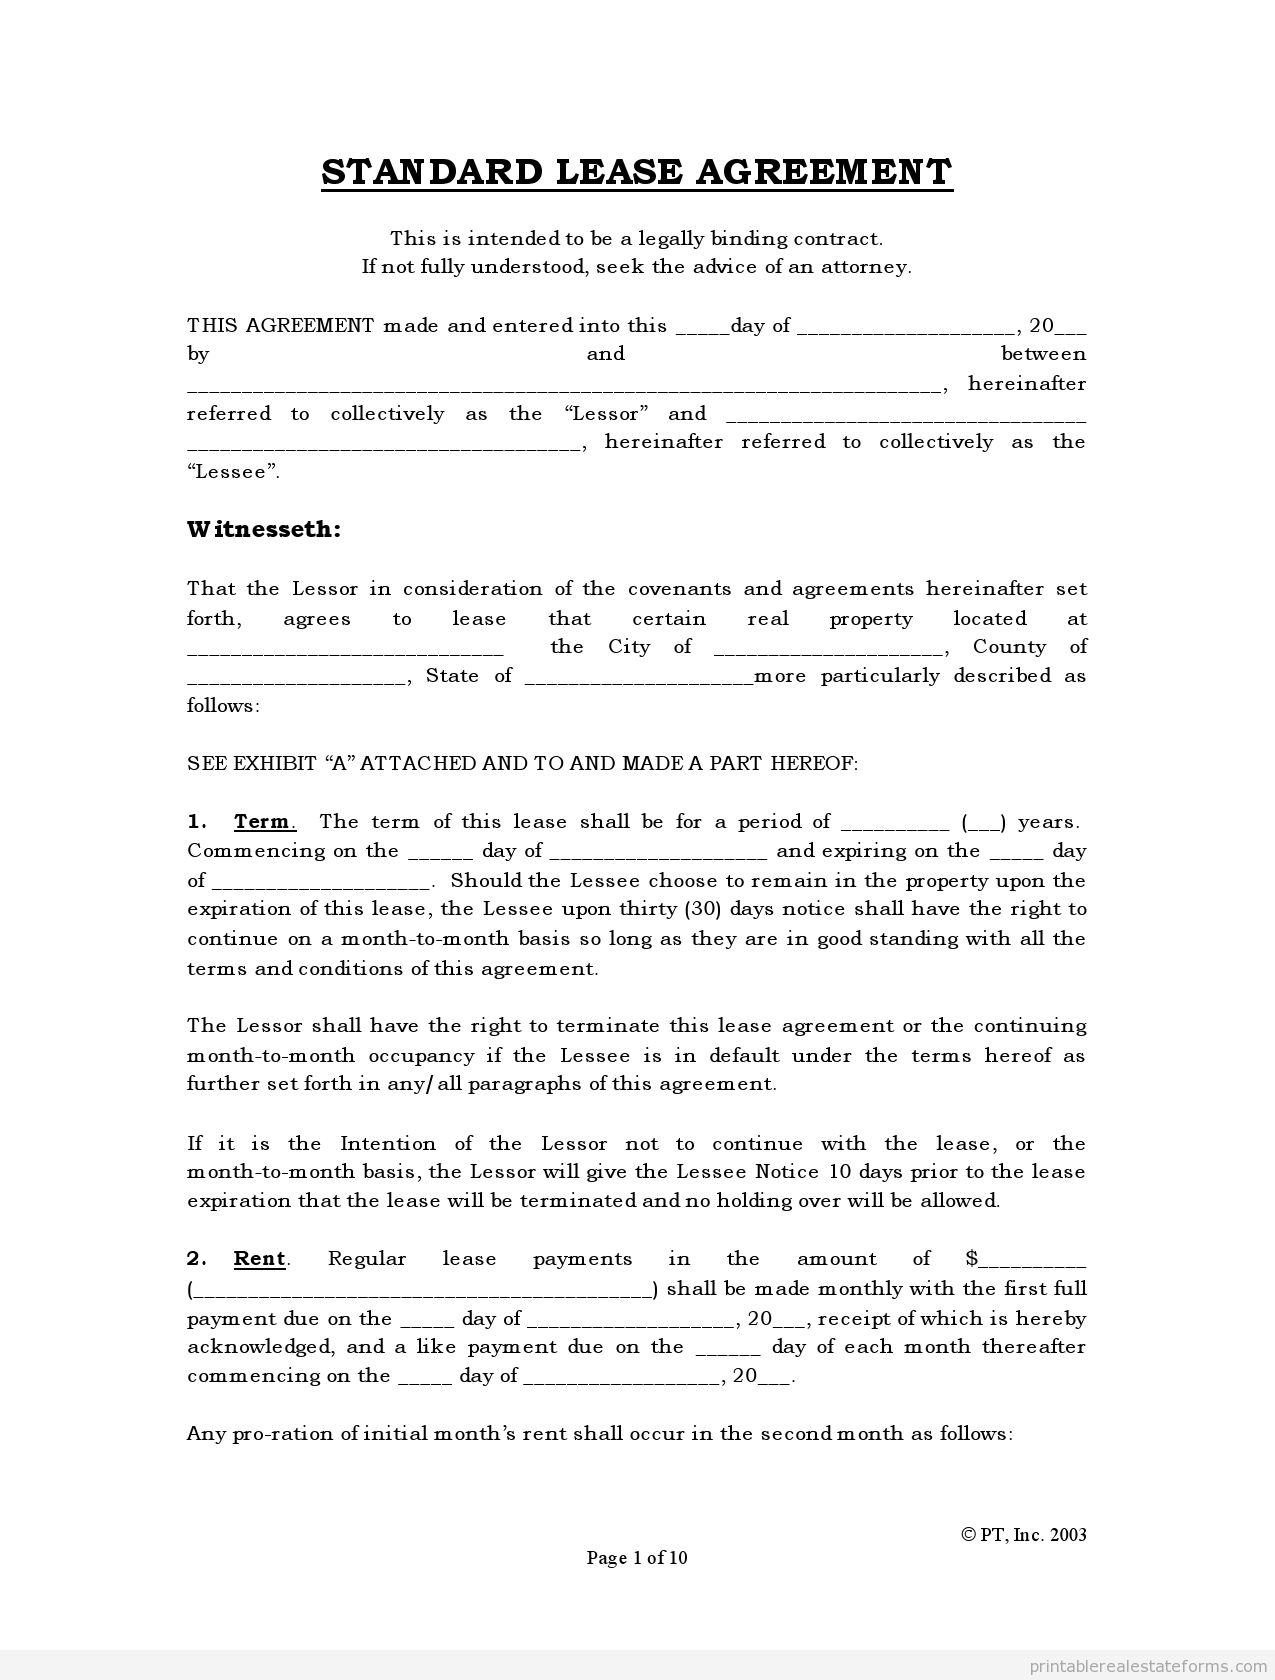 Free Rental Agreements To Print | Free Standard Lease Agreement Form - Free Printable Lease Agreement